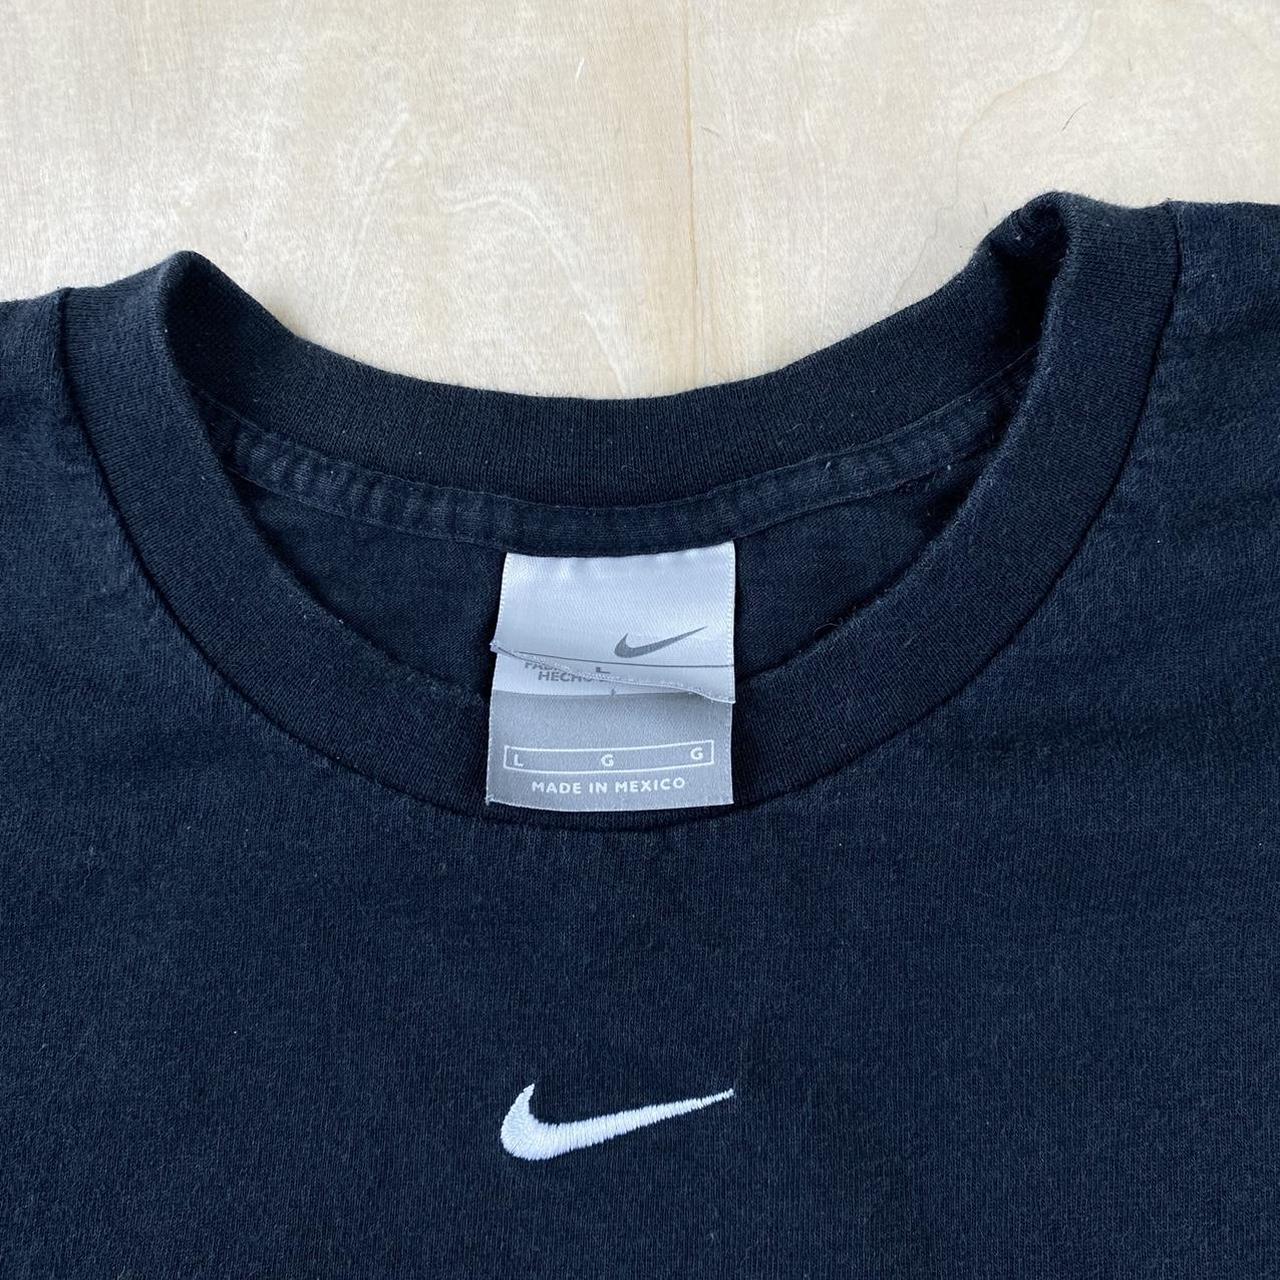 Vintage Nike Center Swoosh Black Long Sleeve Shirt... - Depop